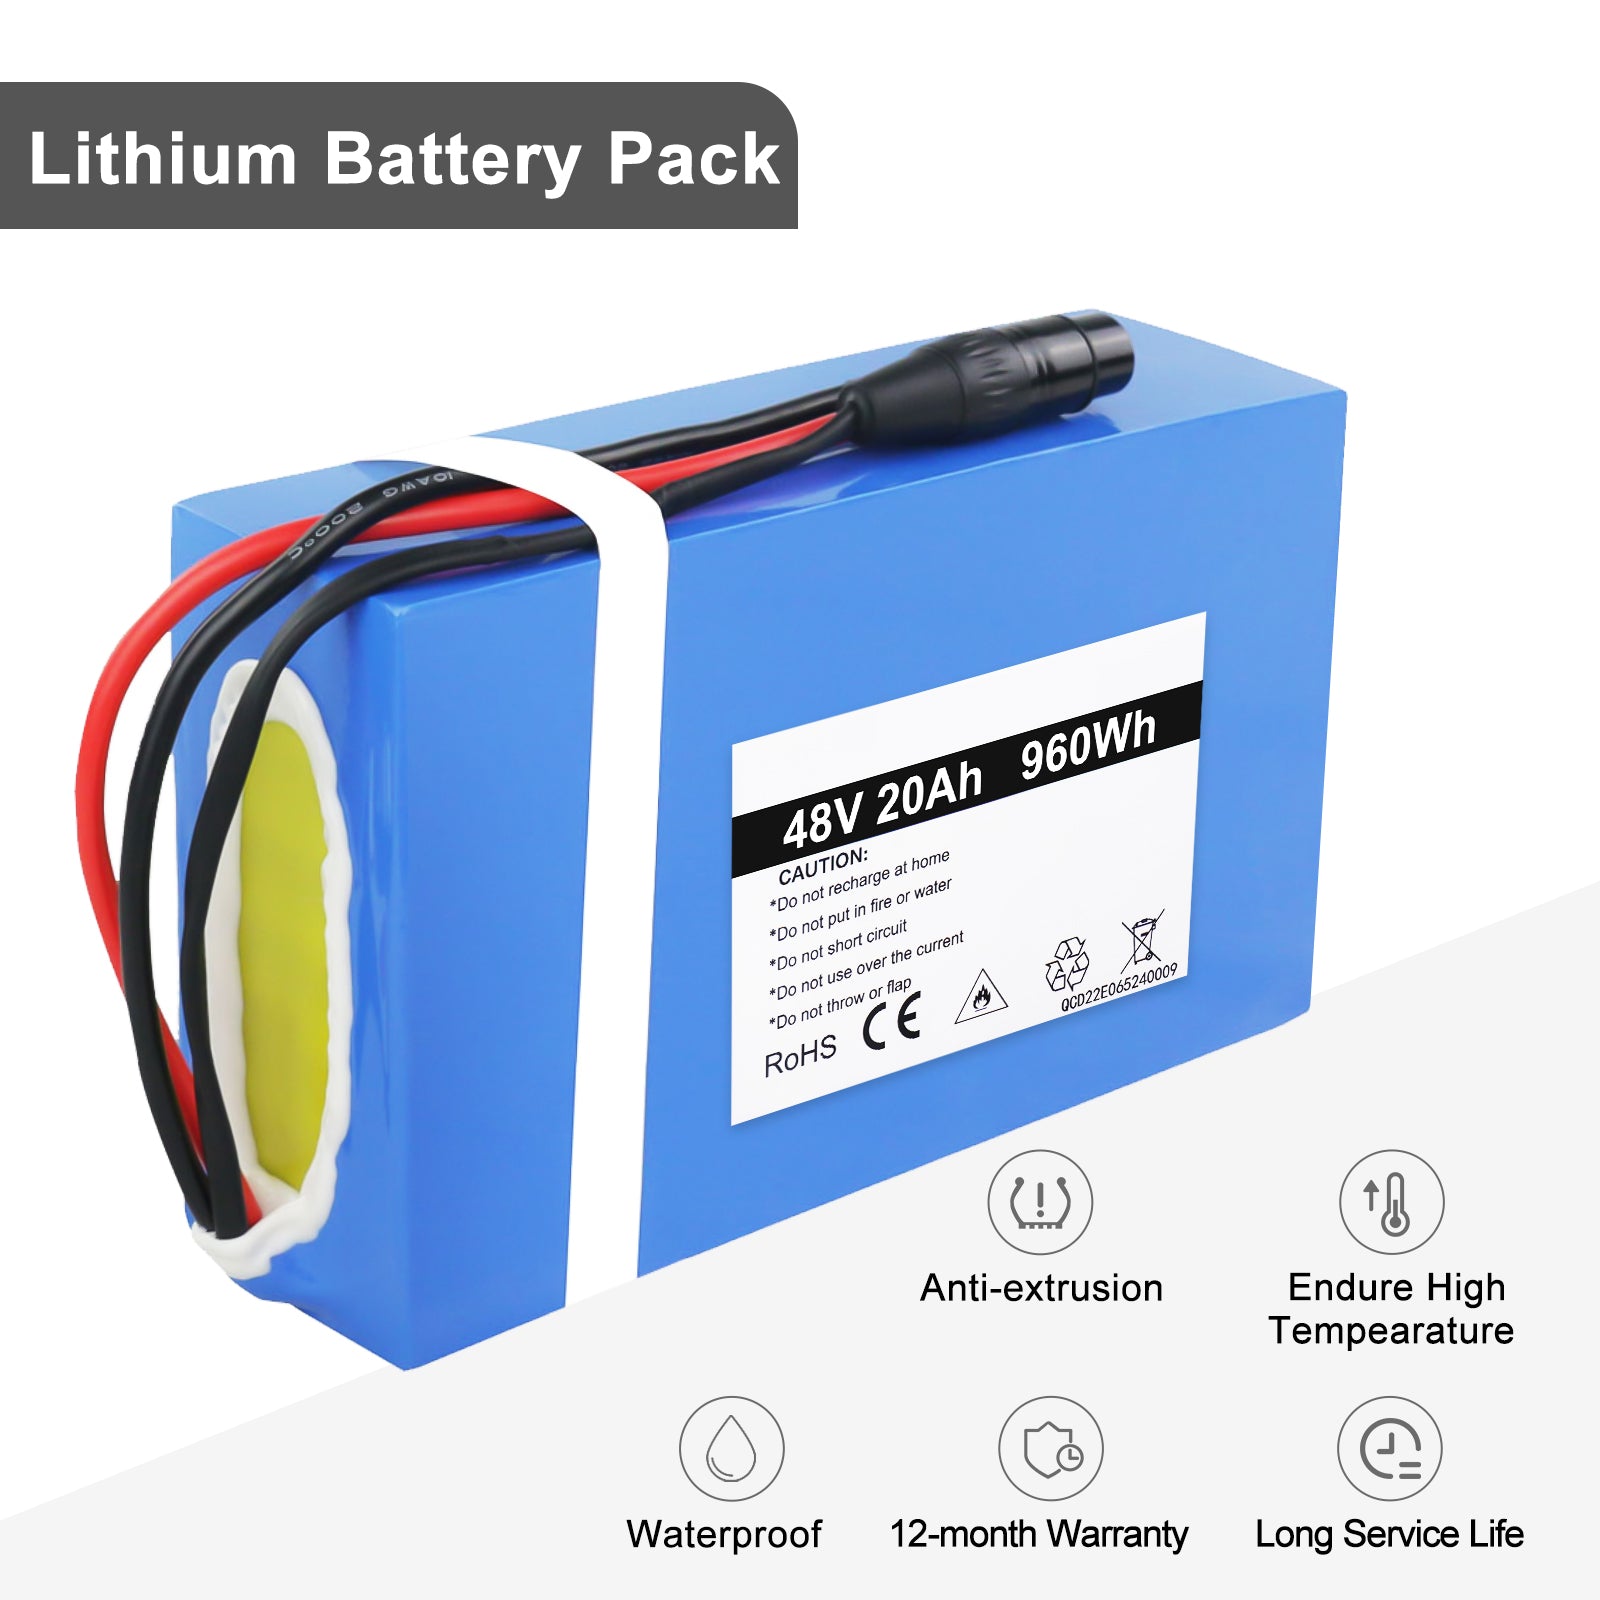 48V 20AH Ebike Lithium Battery for 1500W 1000W 750W 500W Ebike Motercyckle, Go-kart, Scooter, Waterproof lithium Battery Pack